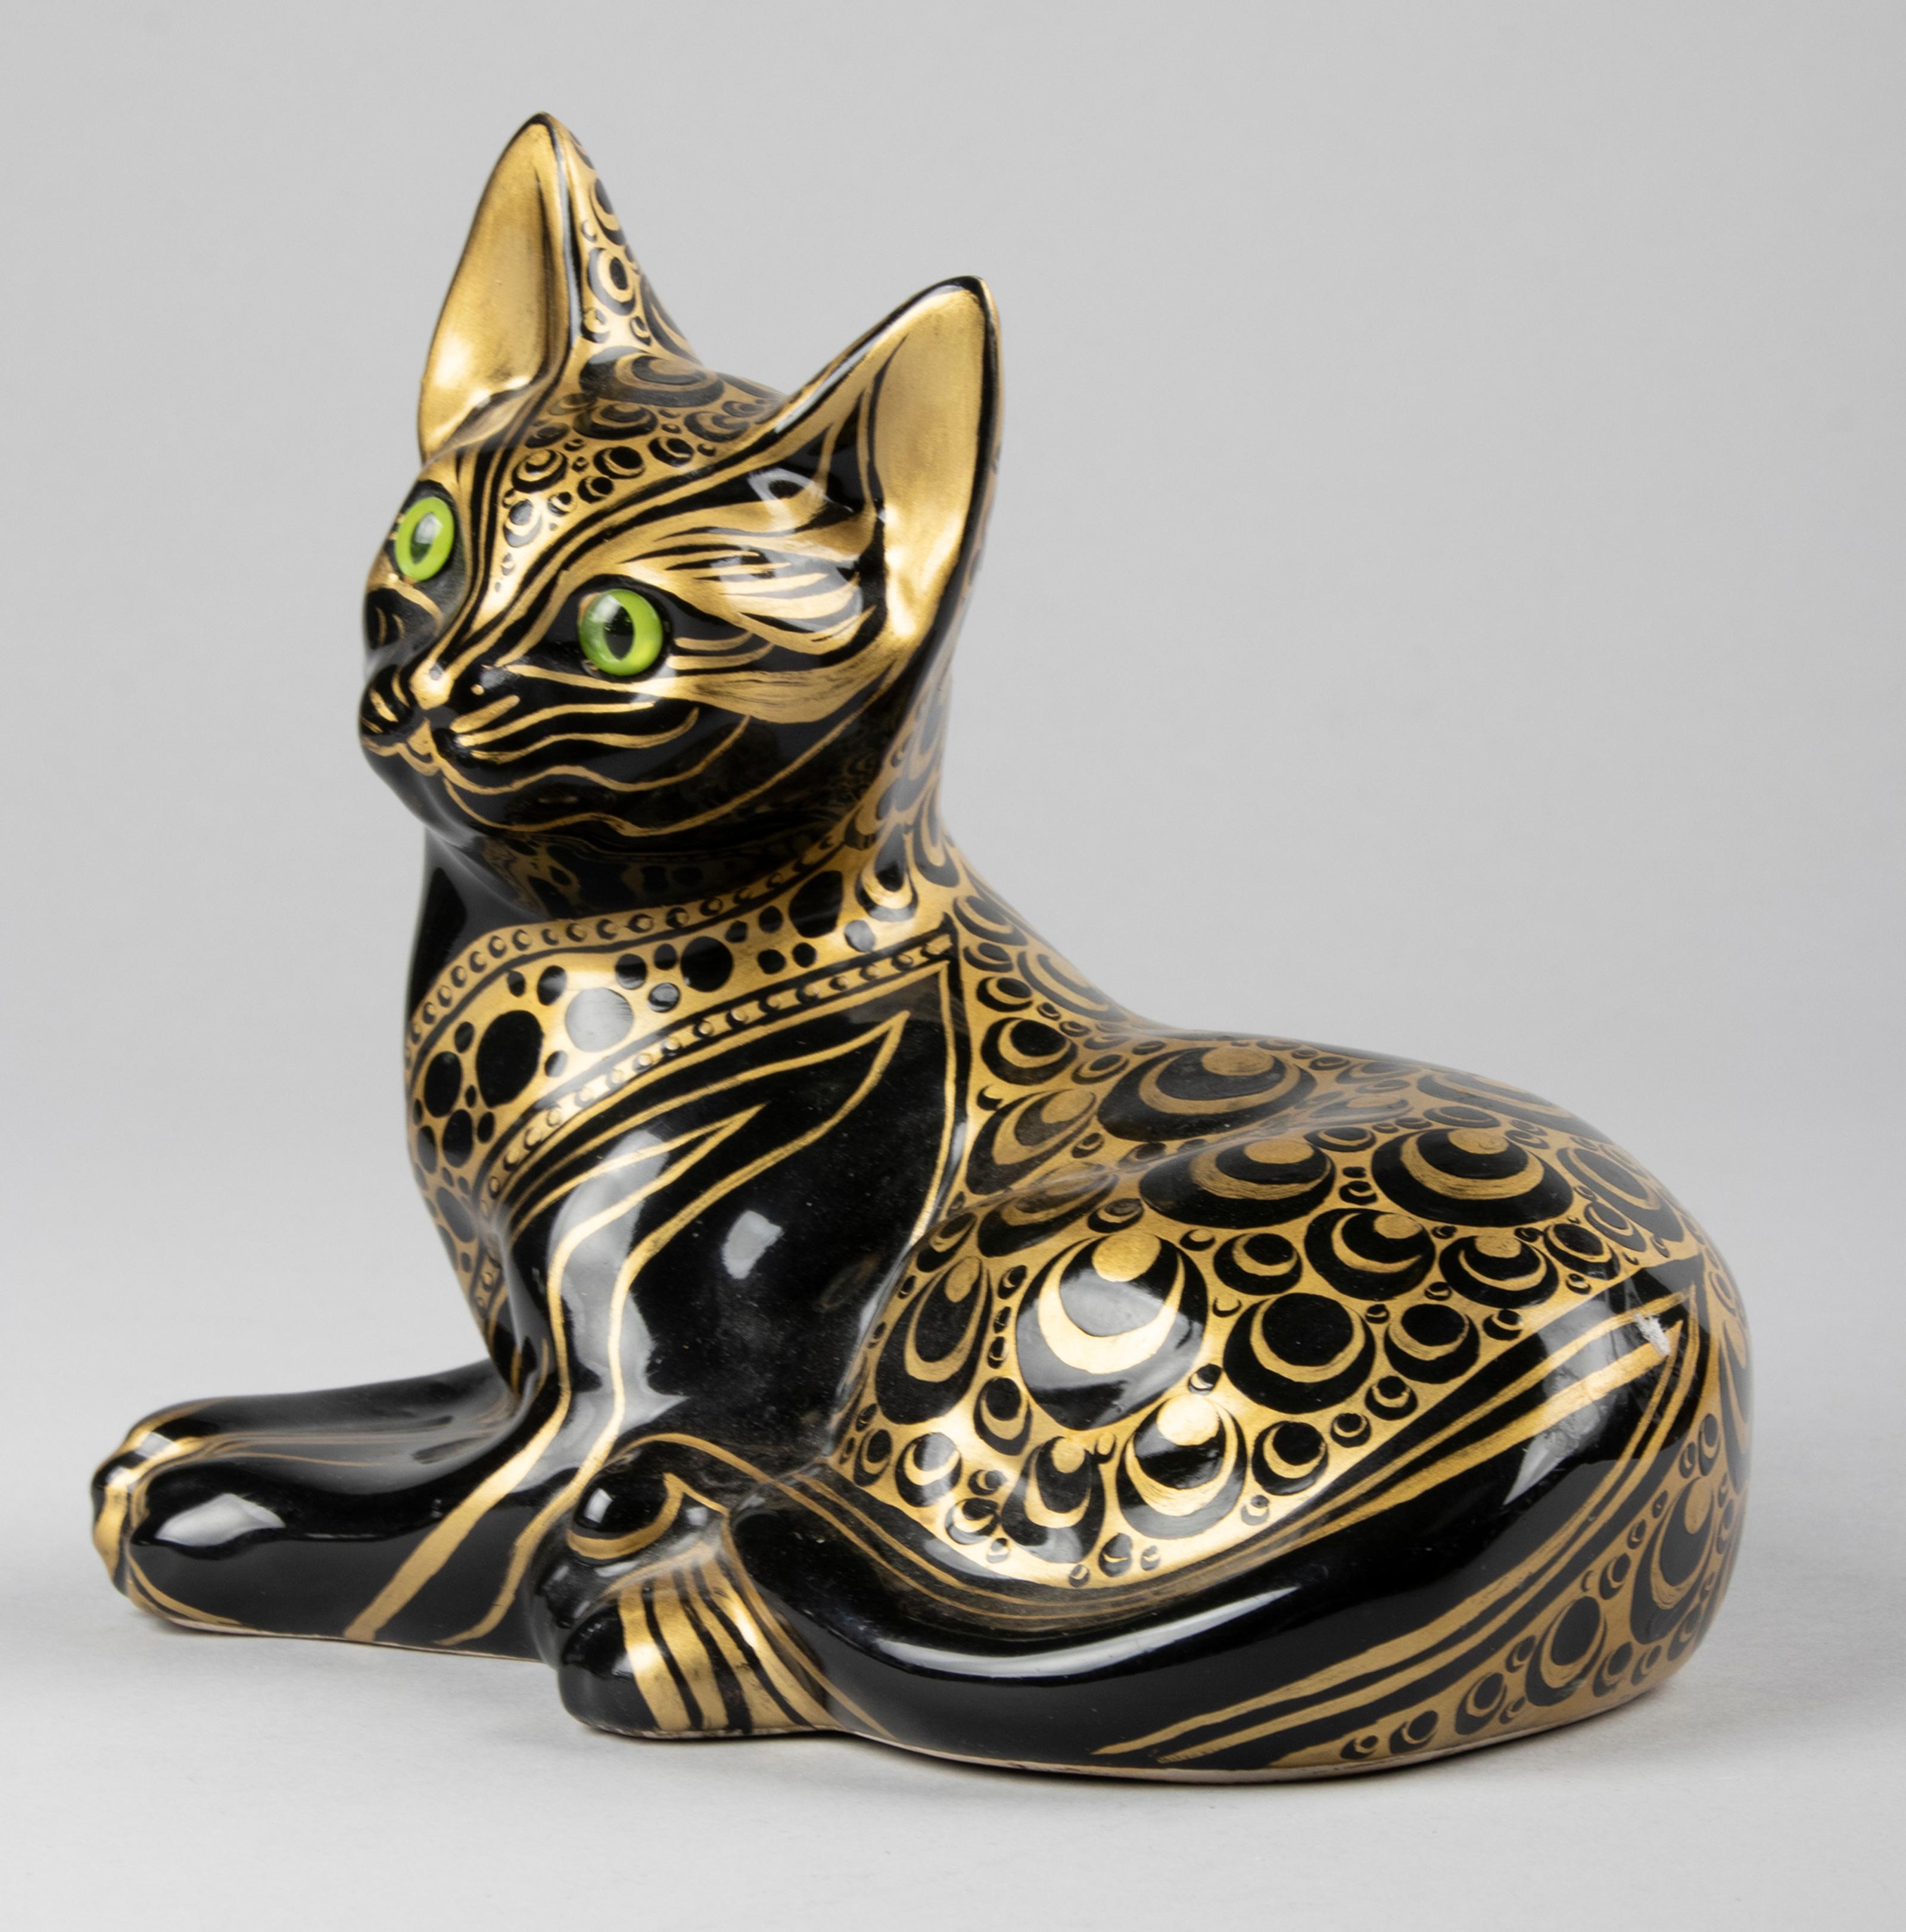 Hand-Painted Mid-Century Modern Ceramic Figurine of a Cat